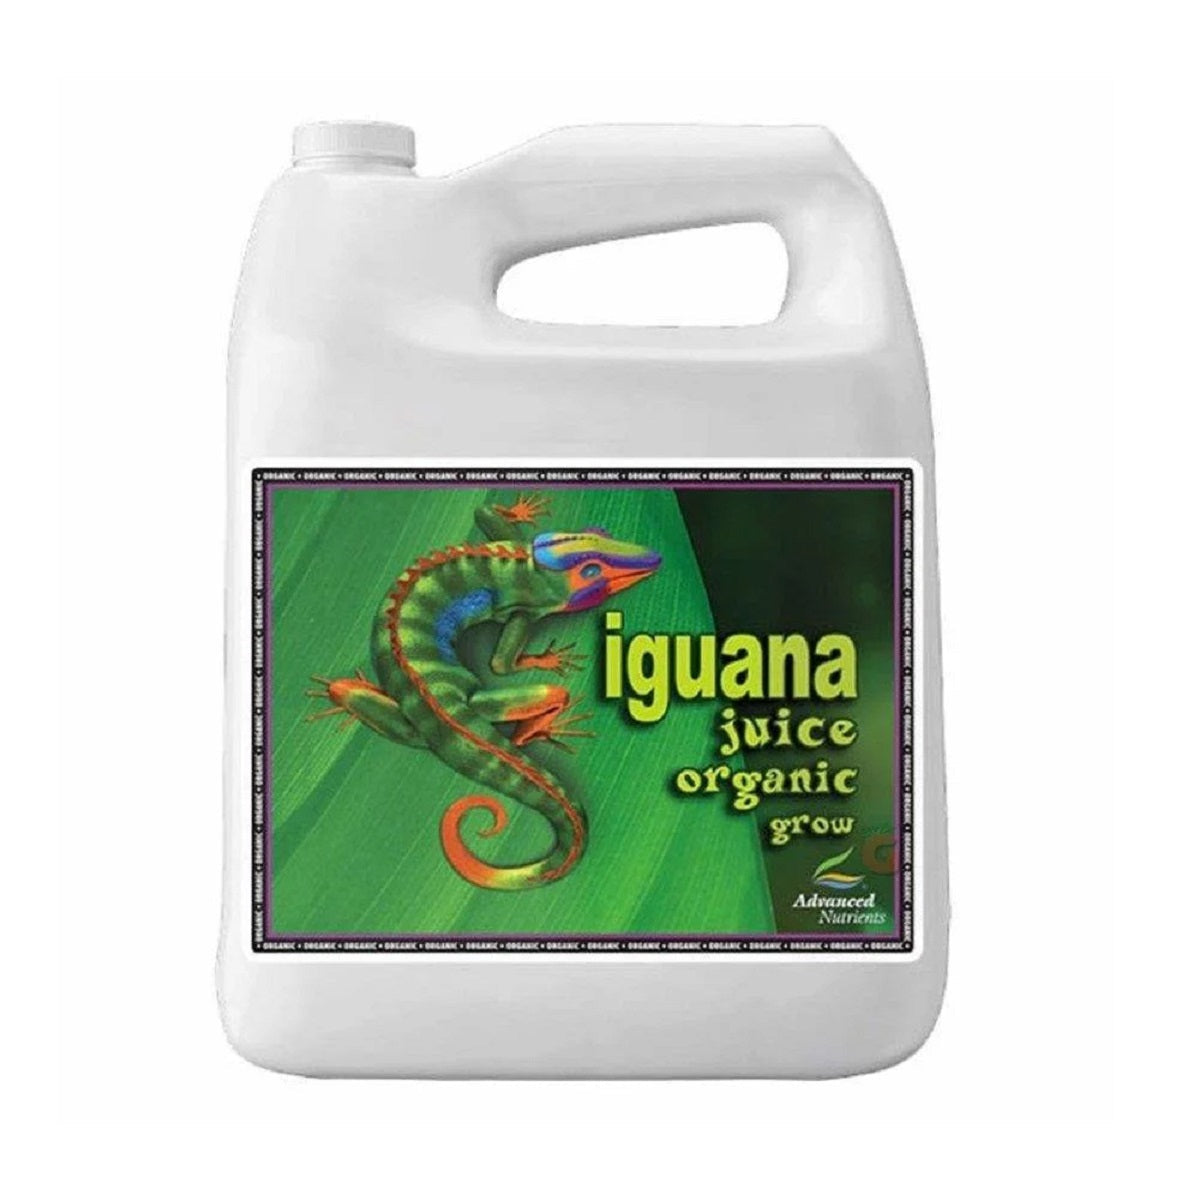 Advanced Nutrients True Organics Iguana Juice 4 litres